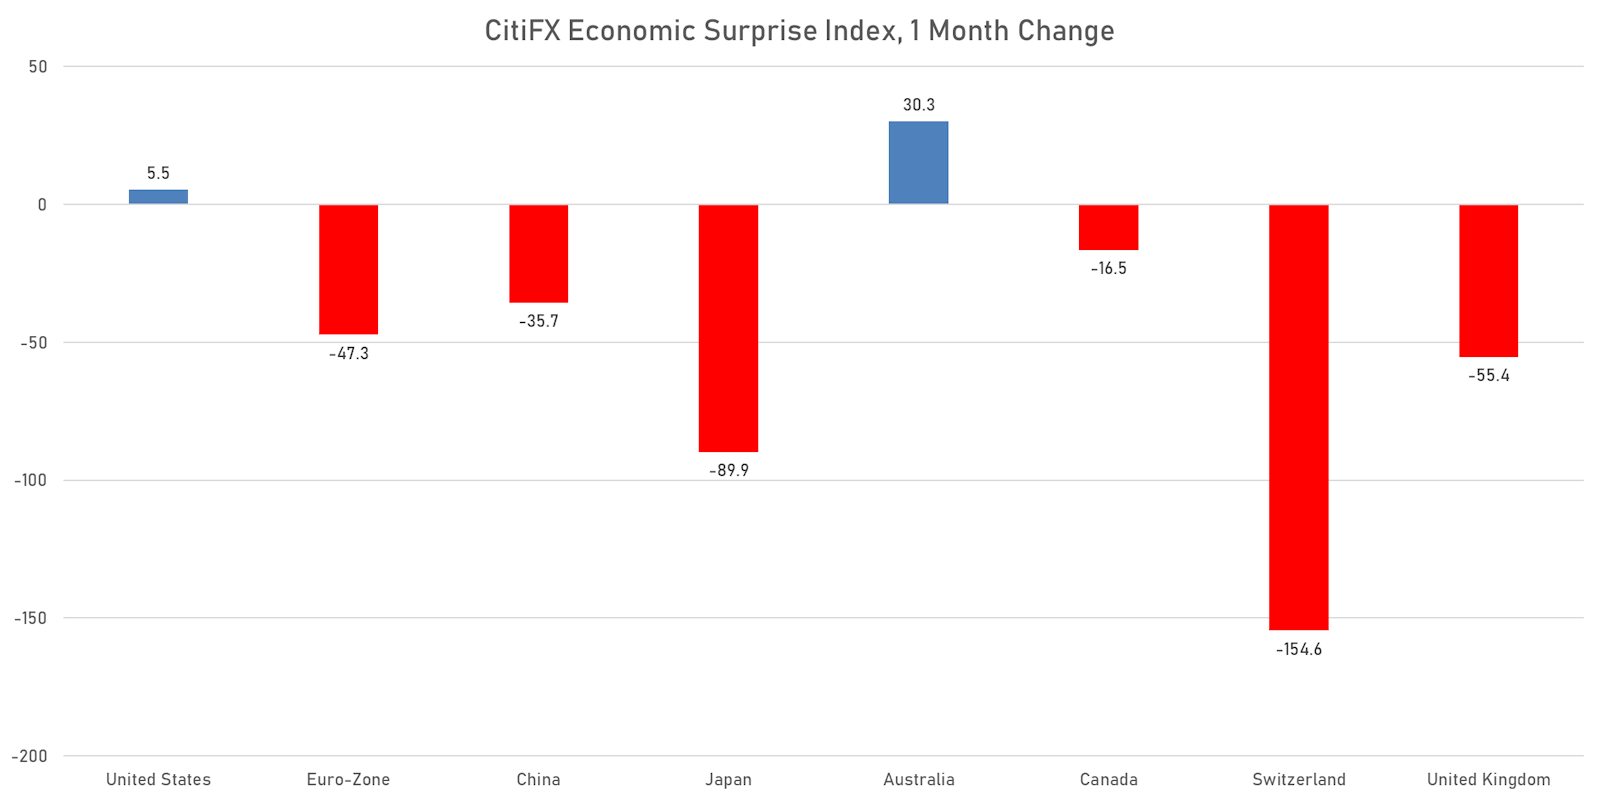 CitiFX Economic Surprise Indices Monthly Change | Sources: ϕpost, Refinitiv data